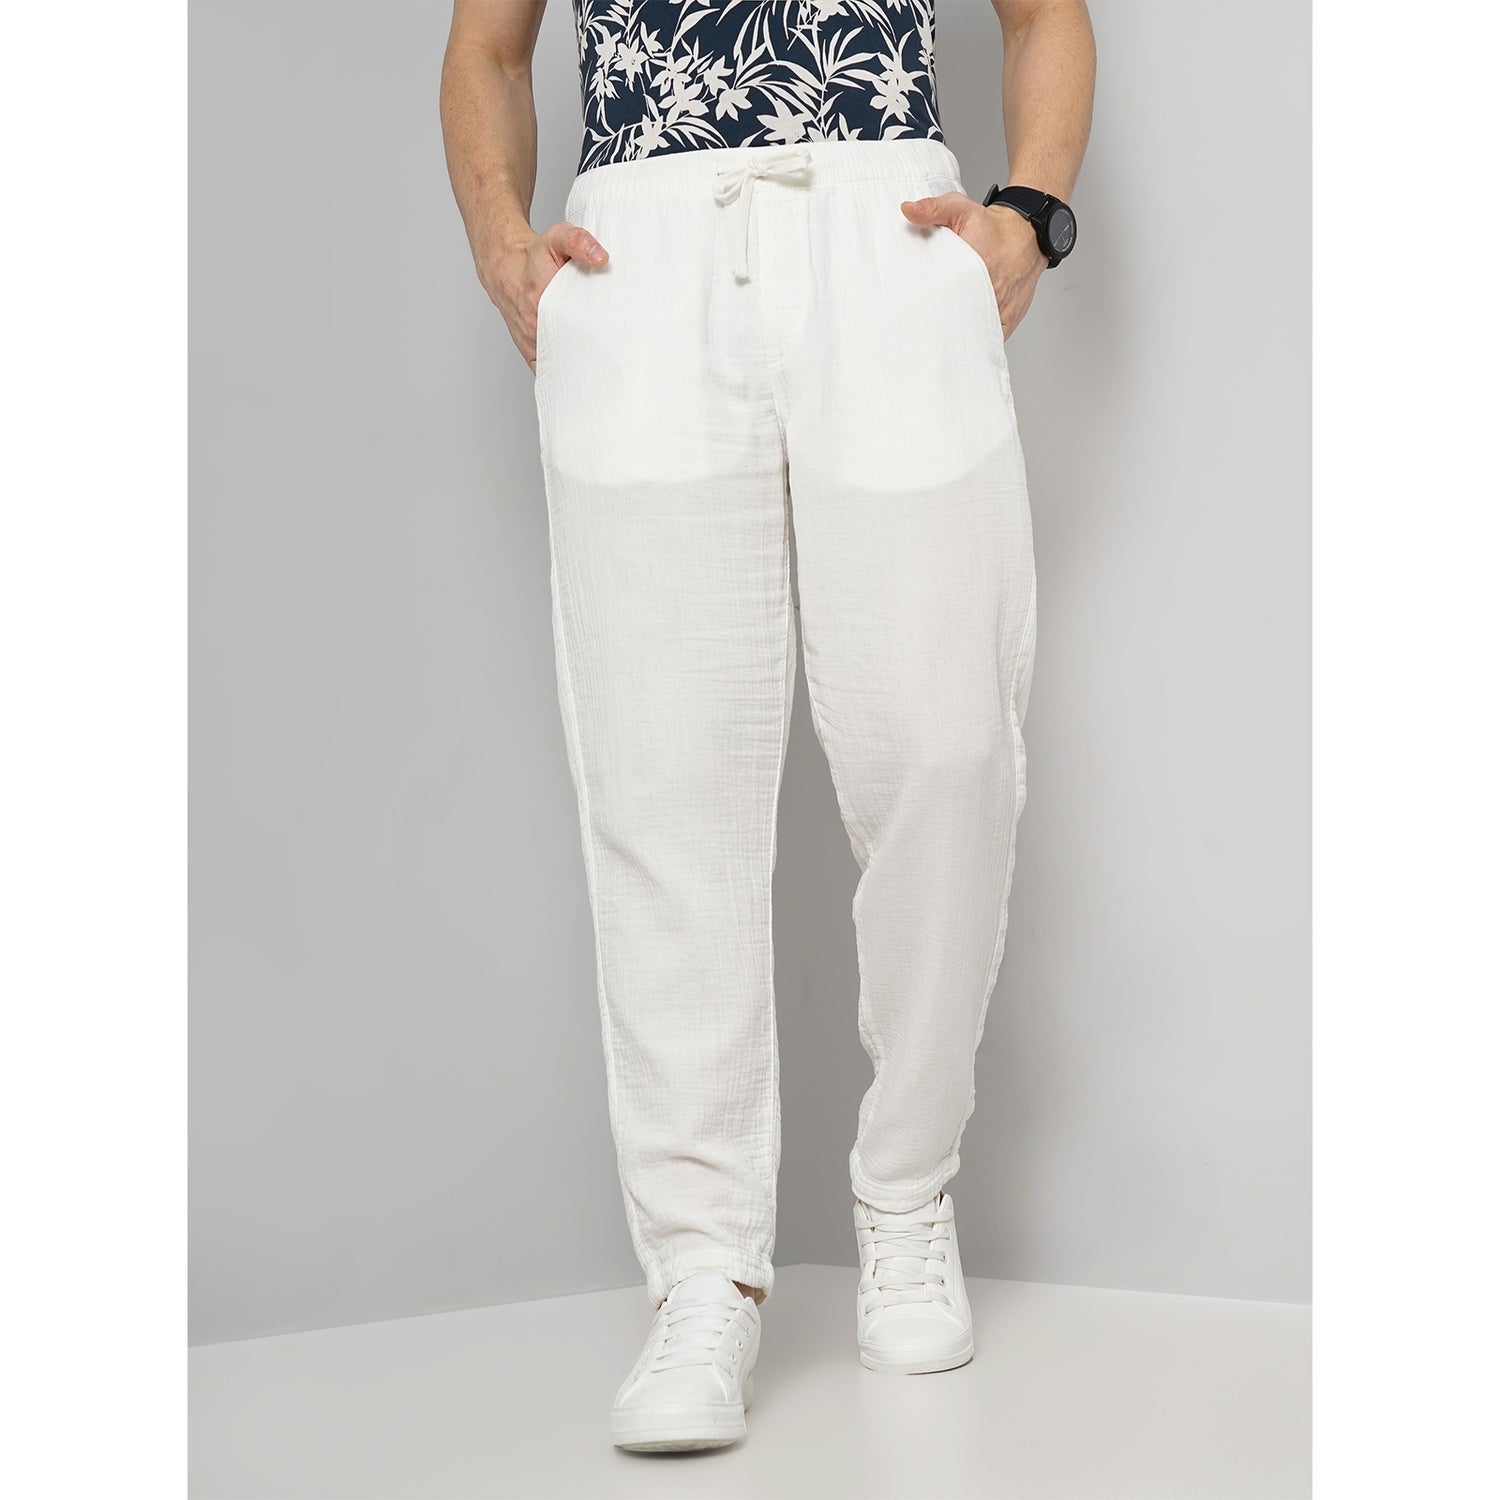 White Slim Fit Cotton Pants for Men by GentWith | Worldwide Shipping | Slim  fit cotton pants, Stretch dress pants, Cotton pants